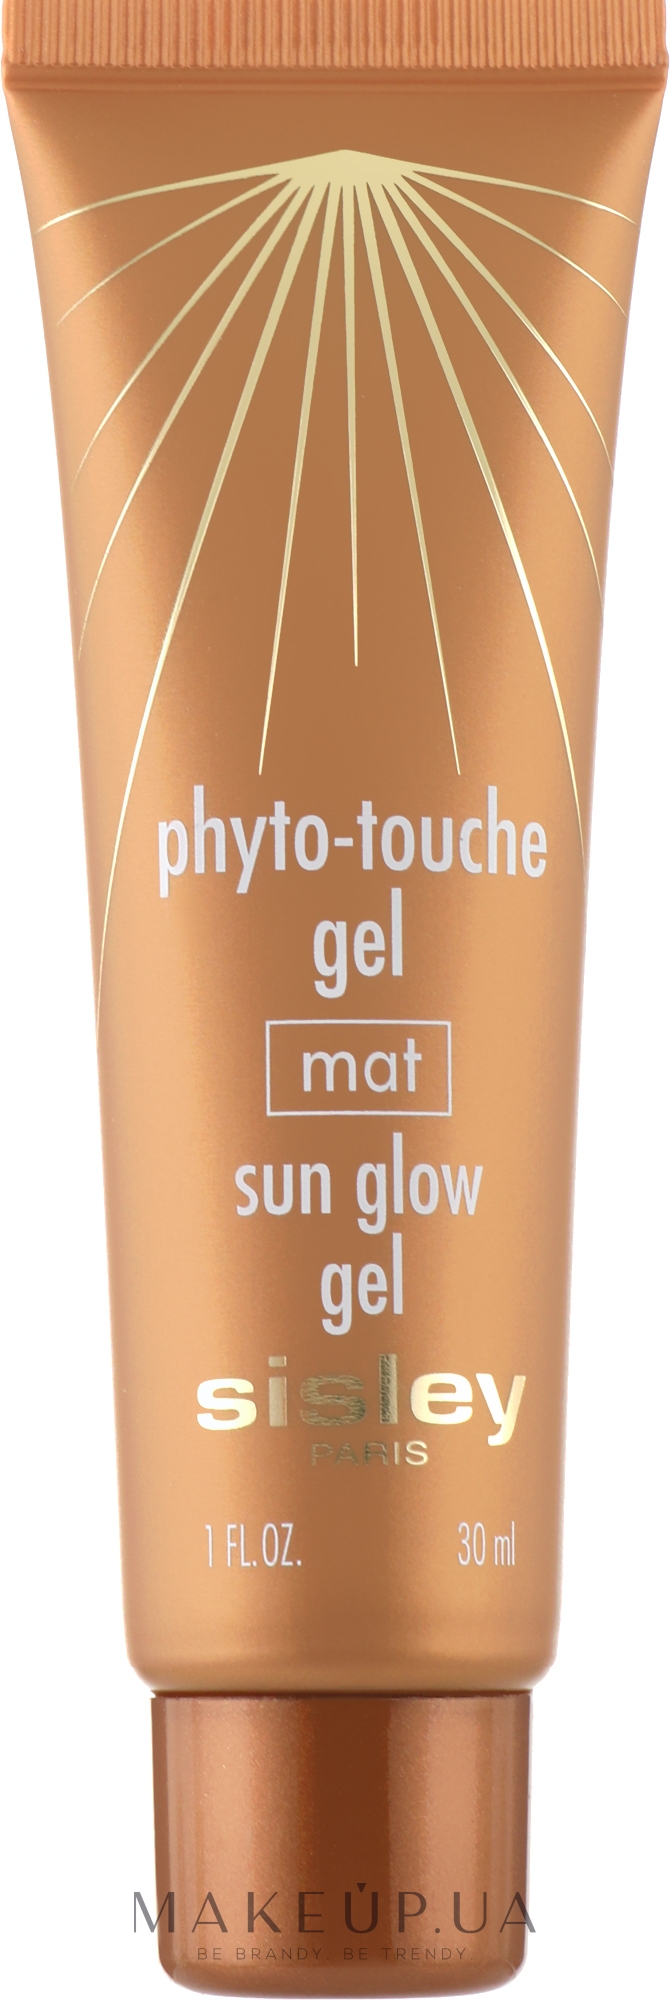 Оттеночный матирующий гель - Sisley Phyto-Touche Gel Sun Glow Gel Mat — фото 30ml